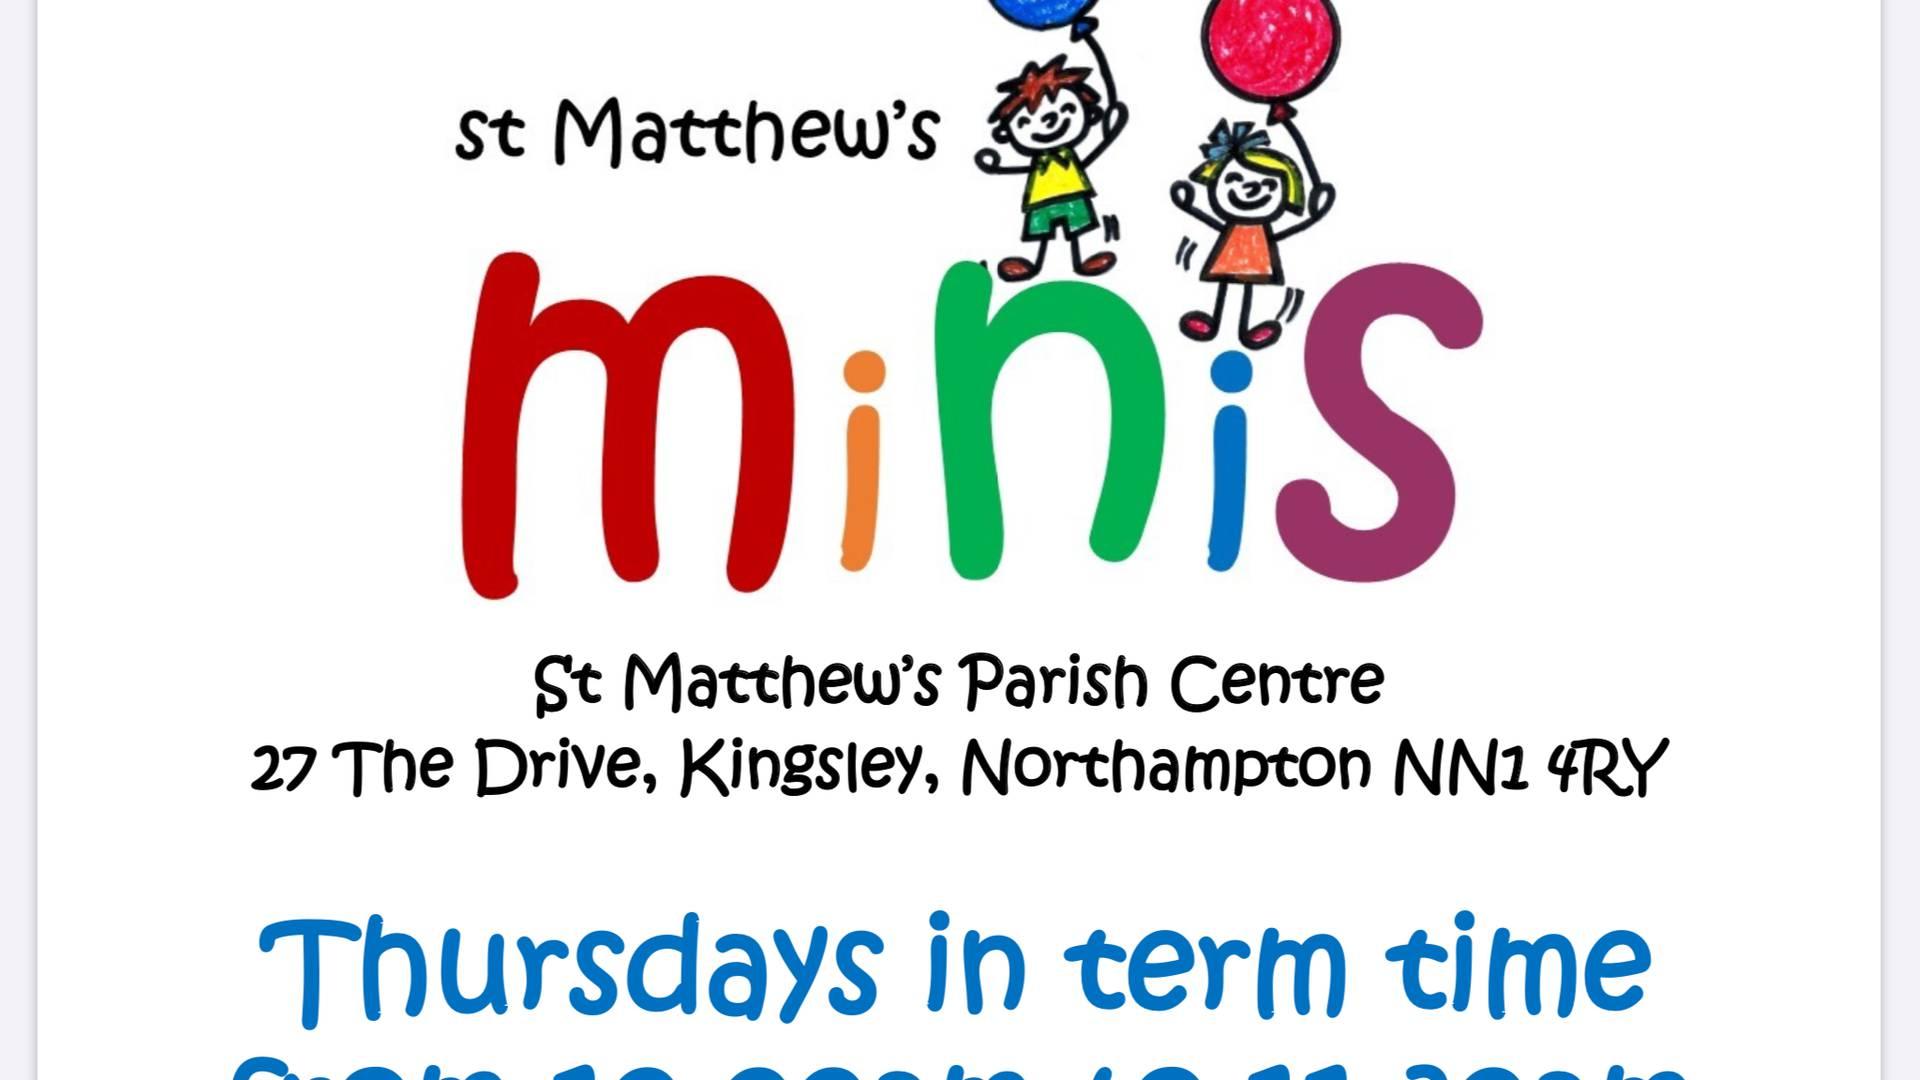 St Matthew’s Minis photo